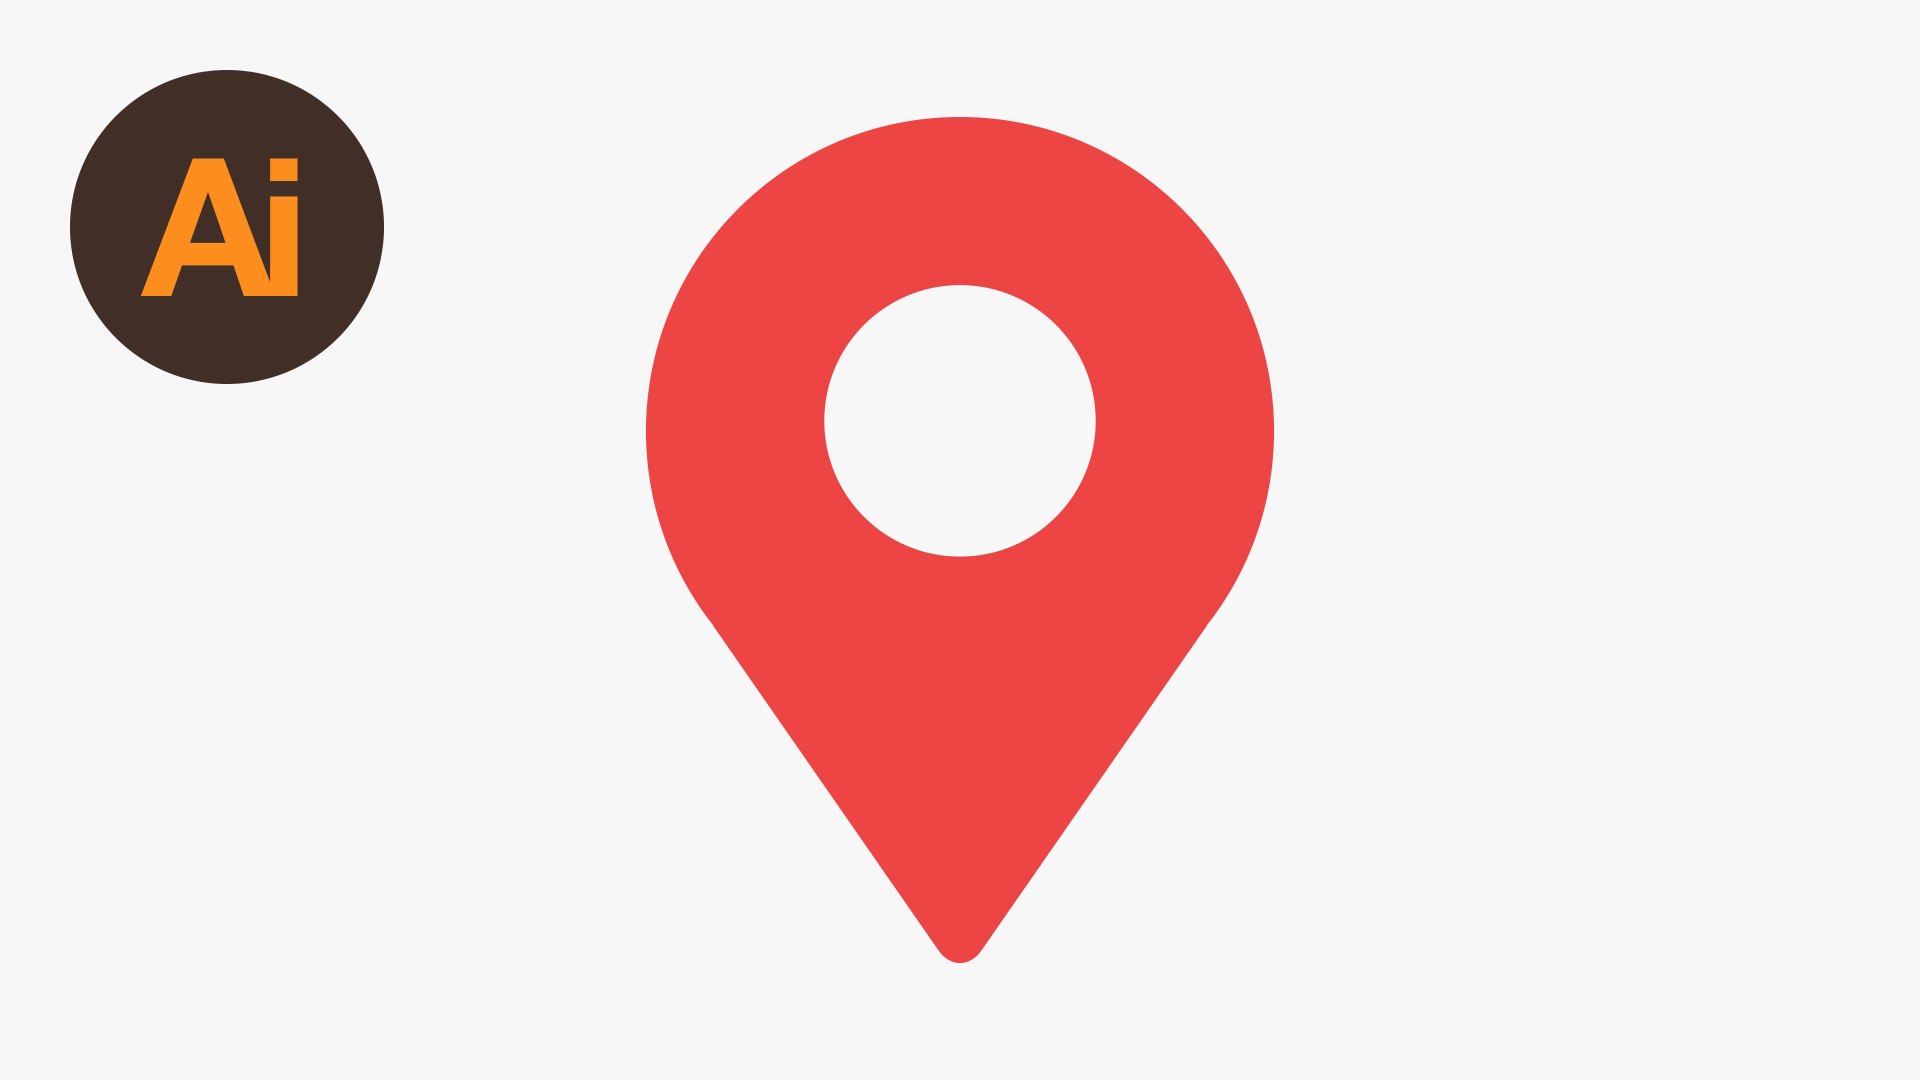 Location pin icon | Myiconfinder